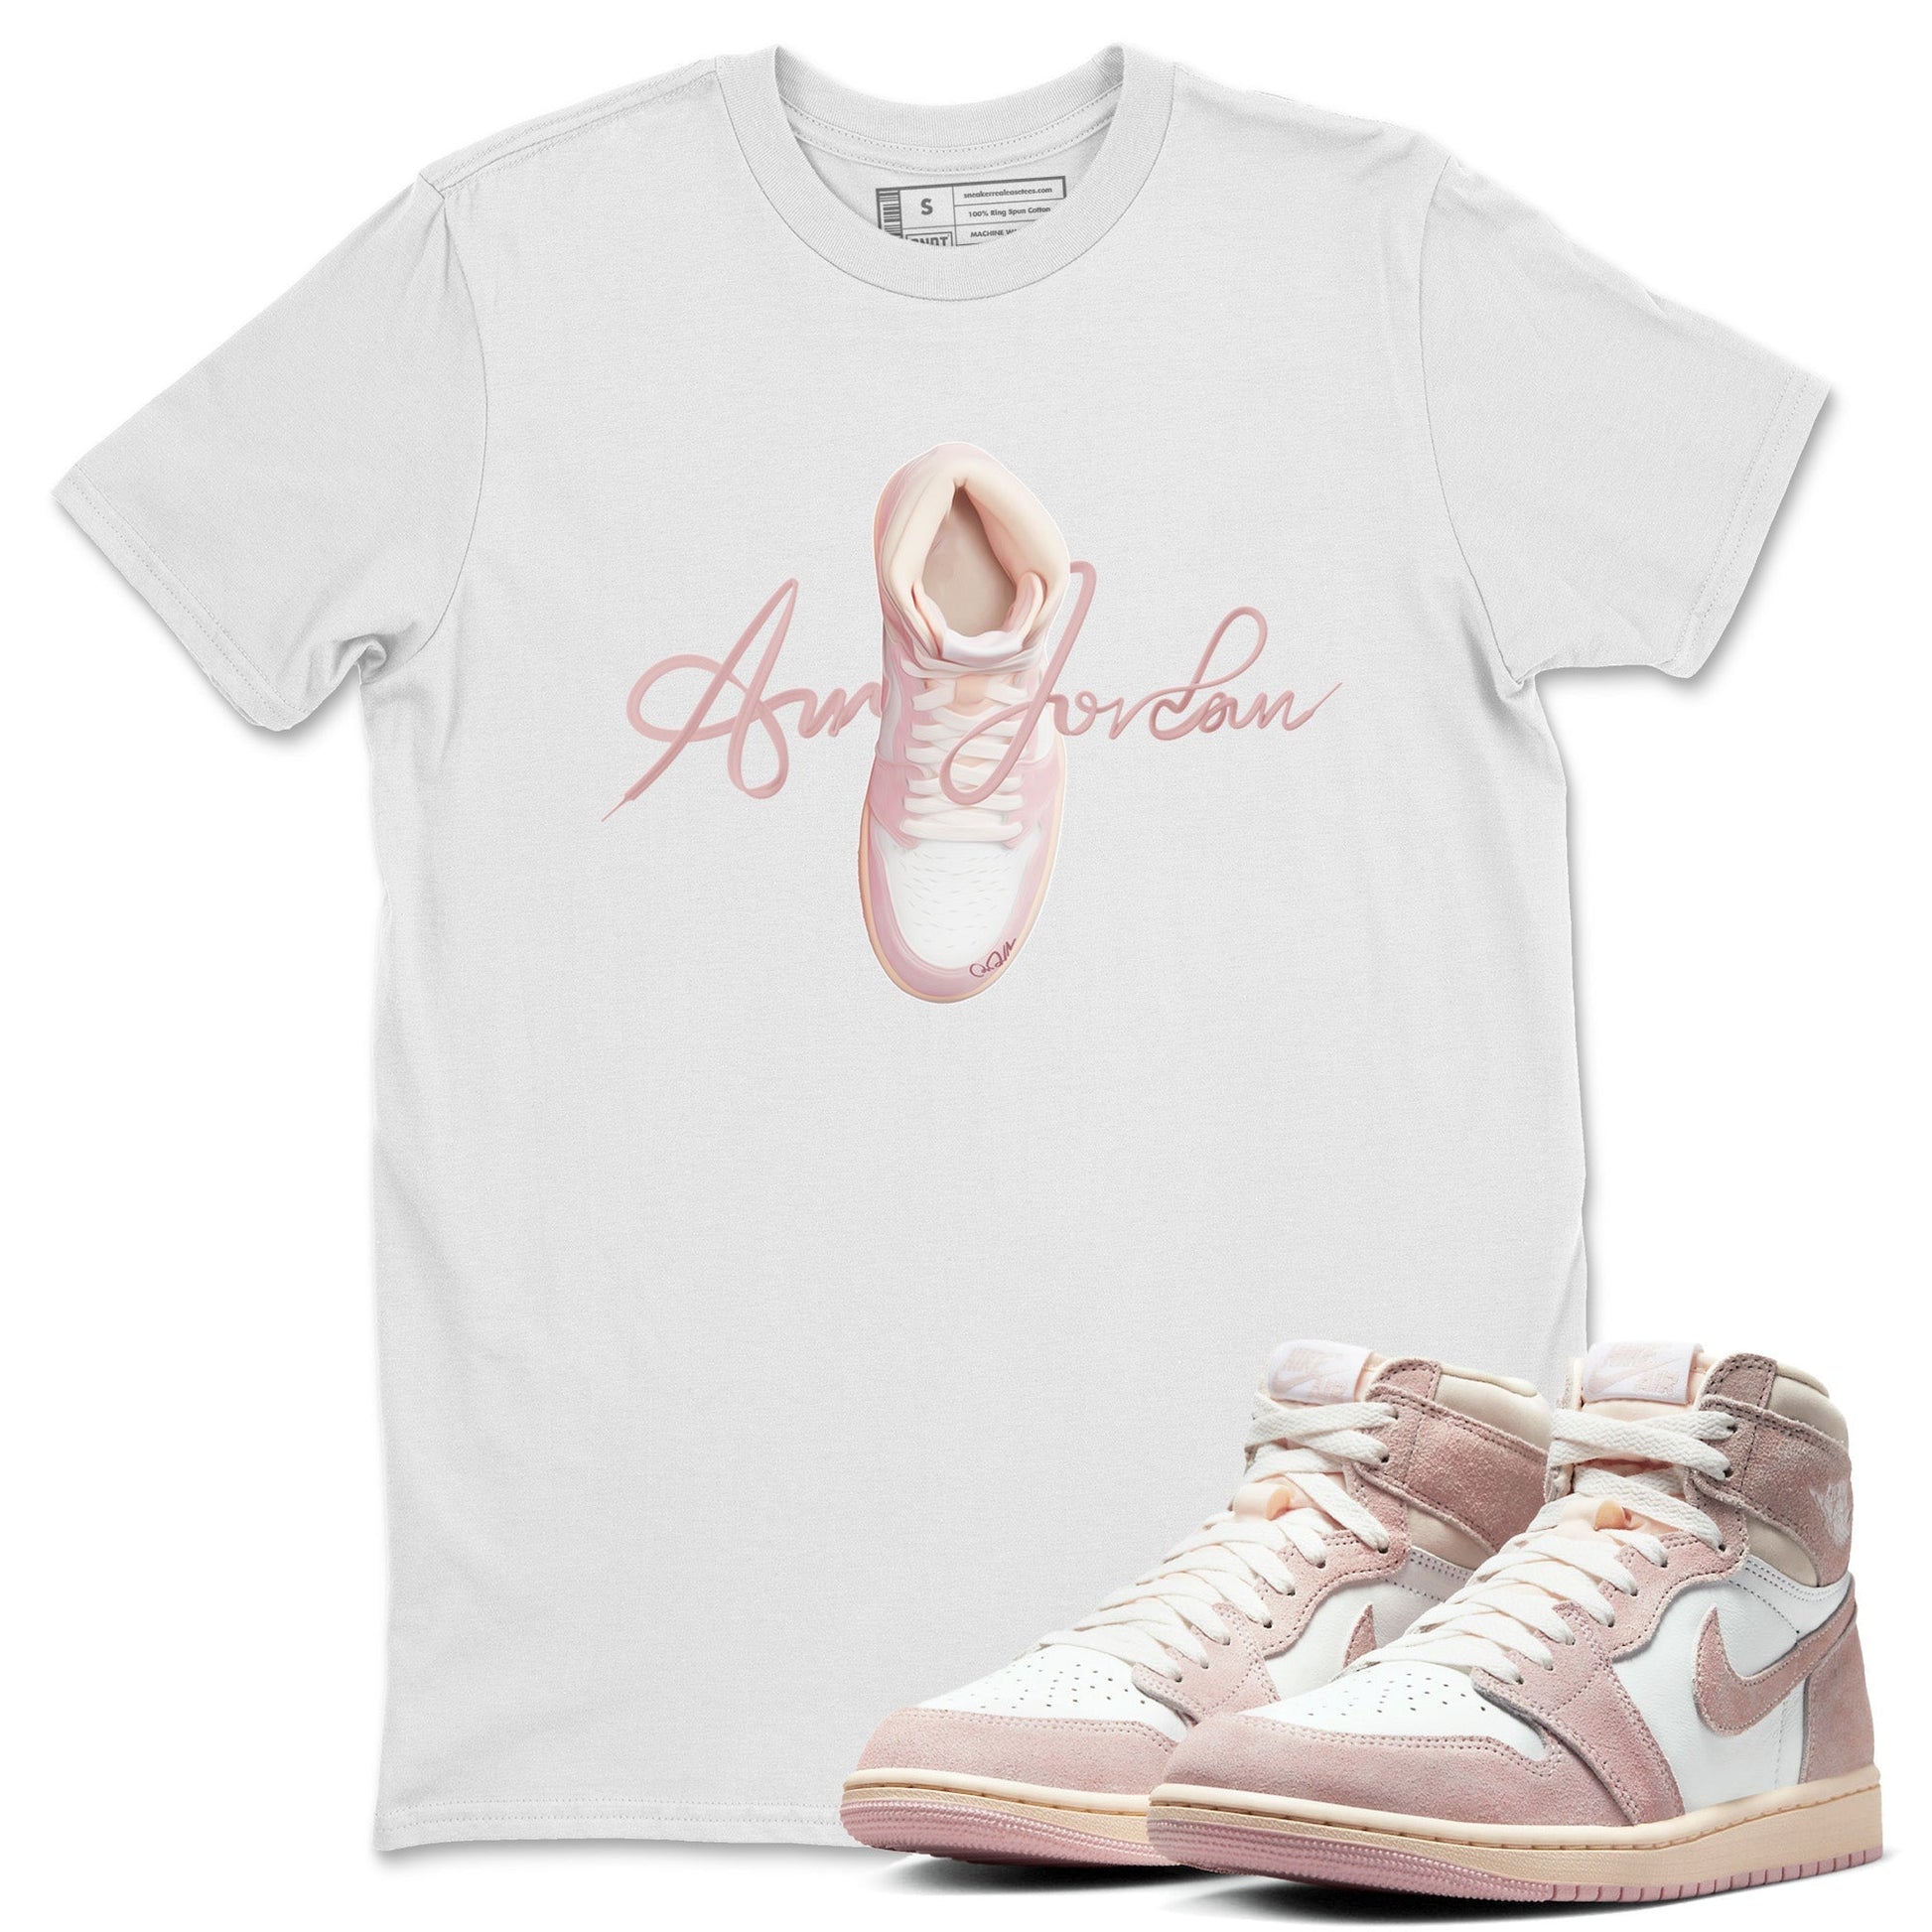 AJ1 Retro High OG Washed Pink Sneaker Tees Drip Gear Zone Caligraphy Shoe Lace Sneaker Tees AJ1 Retro High OG Washed Pink Shirt Unisex Shirts White 1